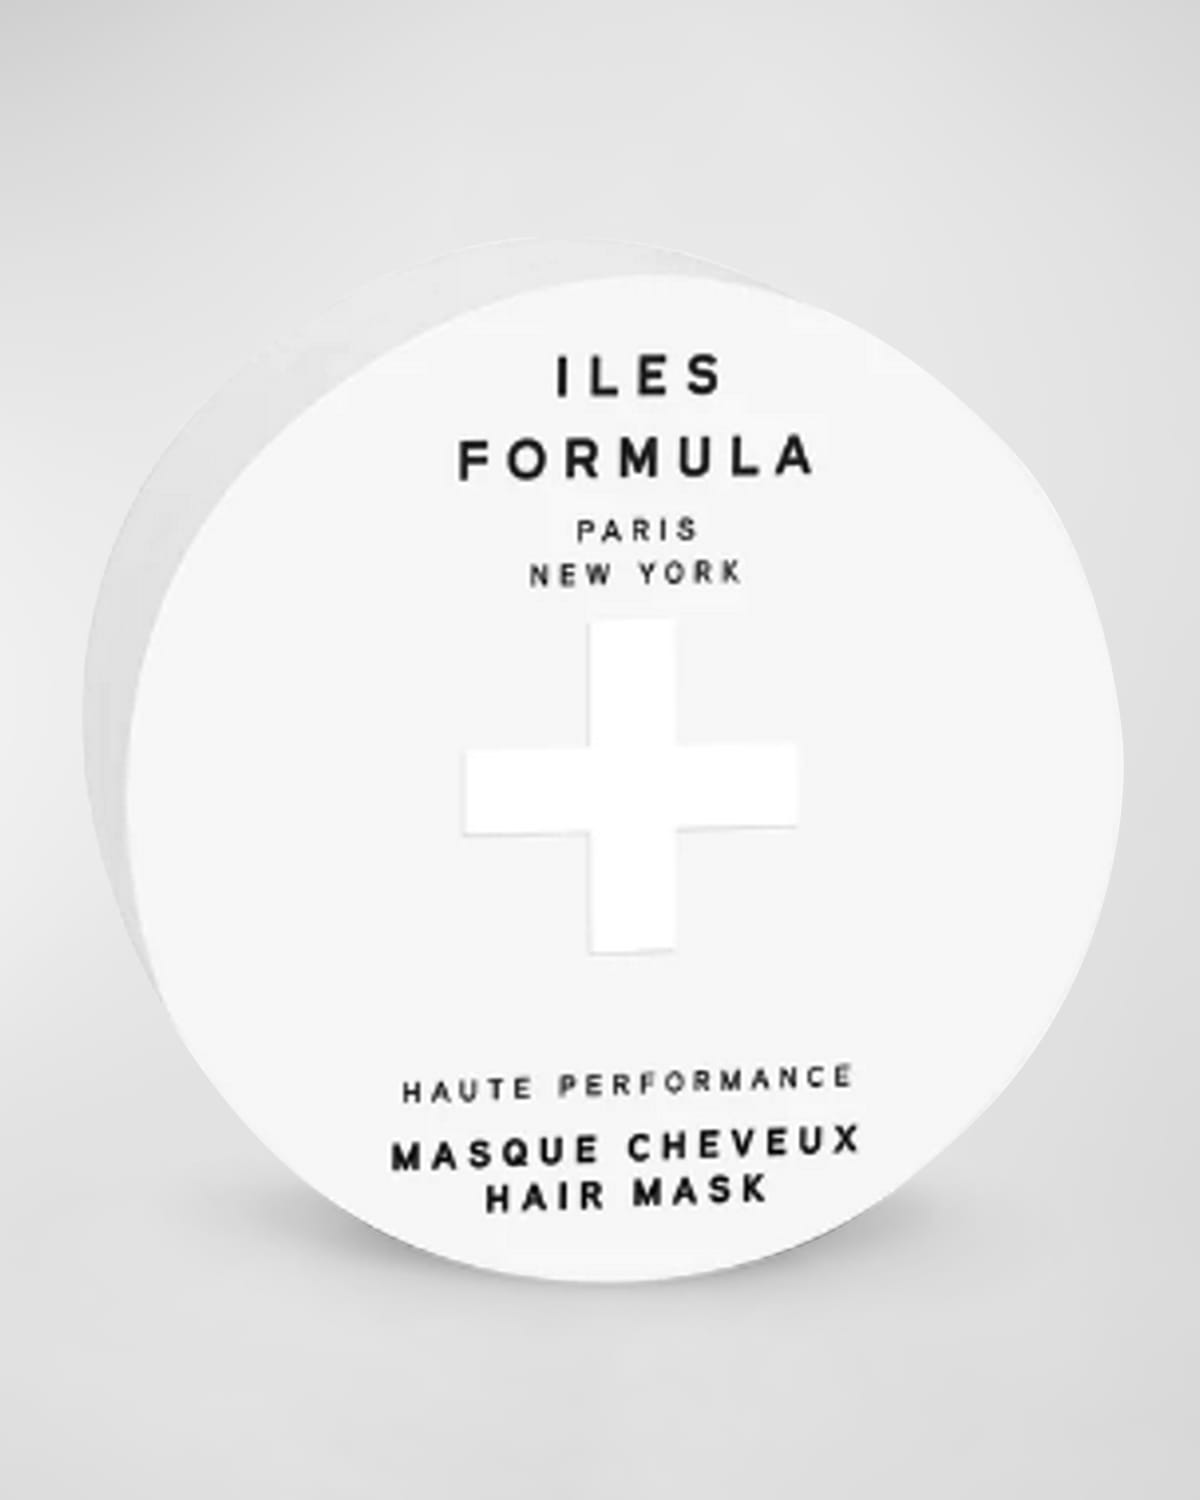 Hair Mask Haute Performance, 6.4 oz.